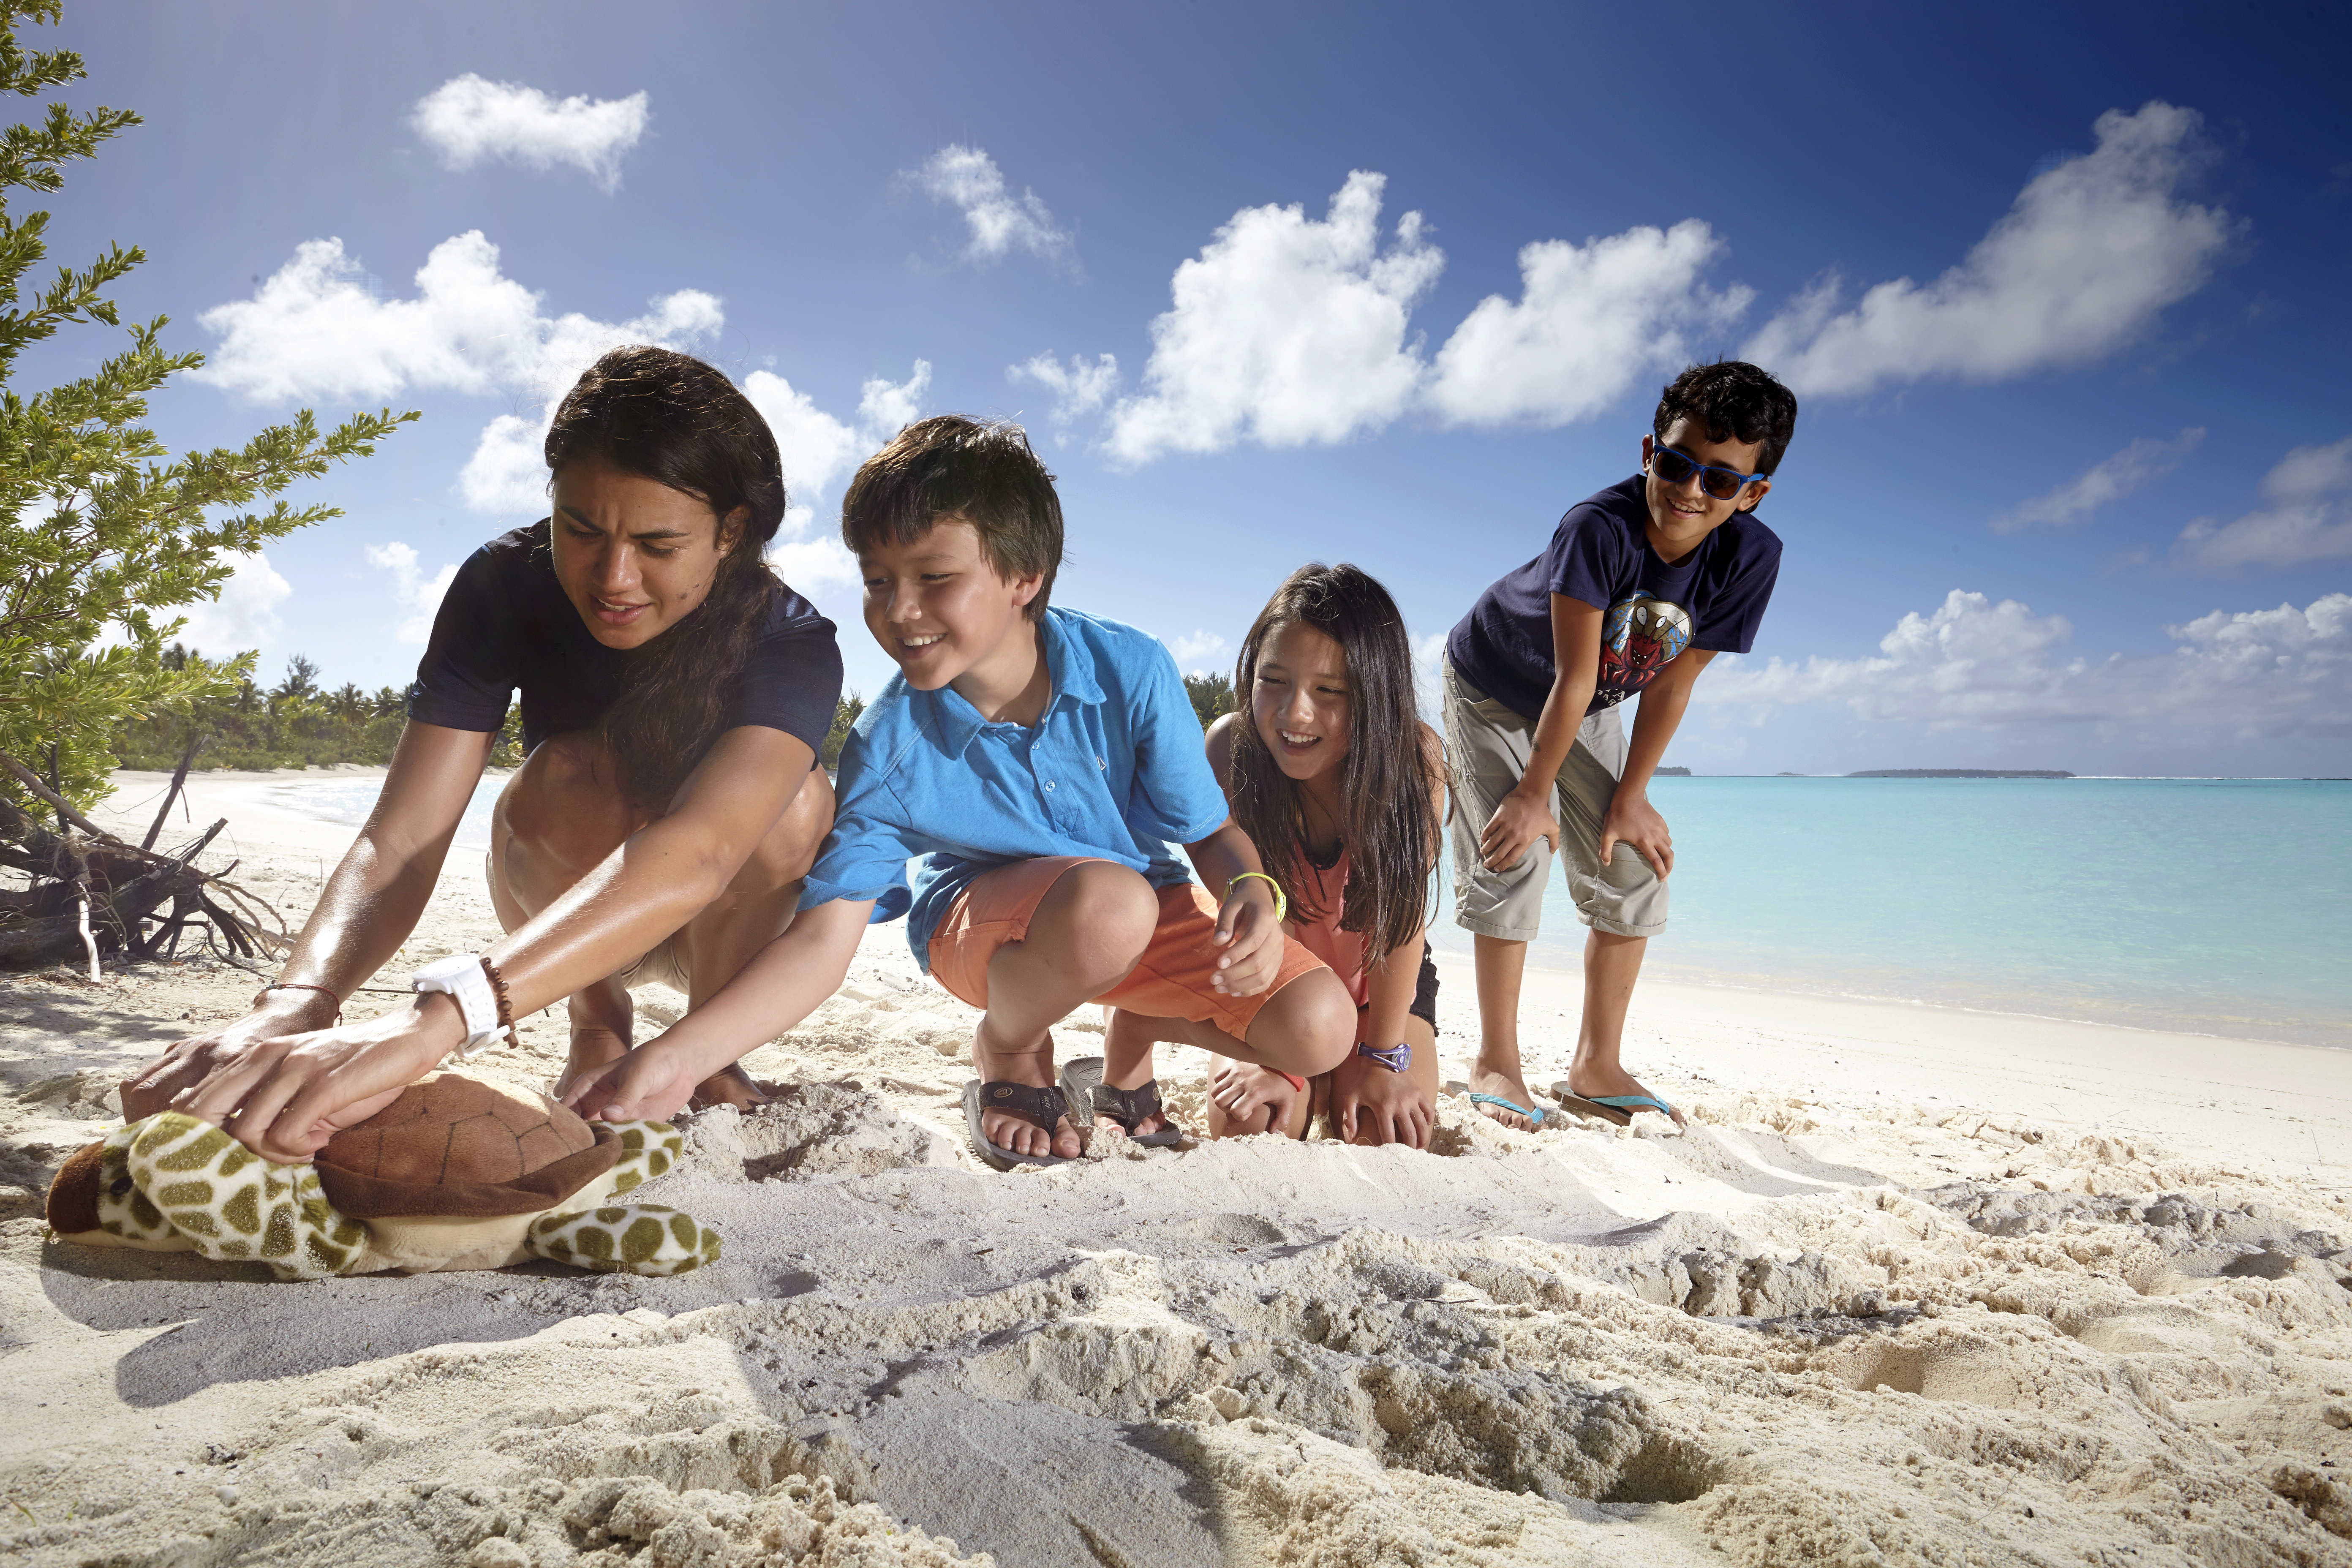 Tourism activity. Богатые дети. Богатые дети на пляже. Activities on the Coast. "Naturalist Resort".